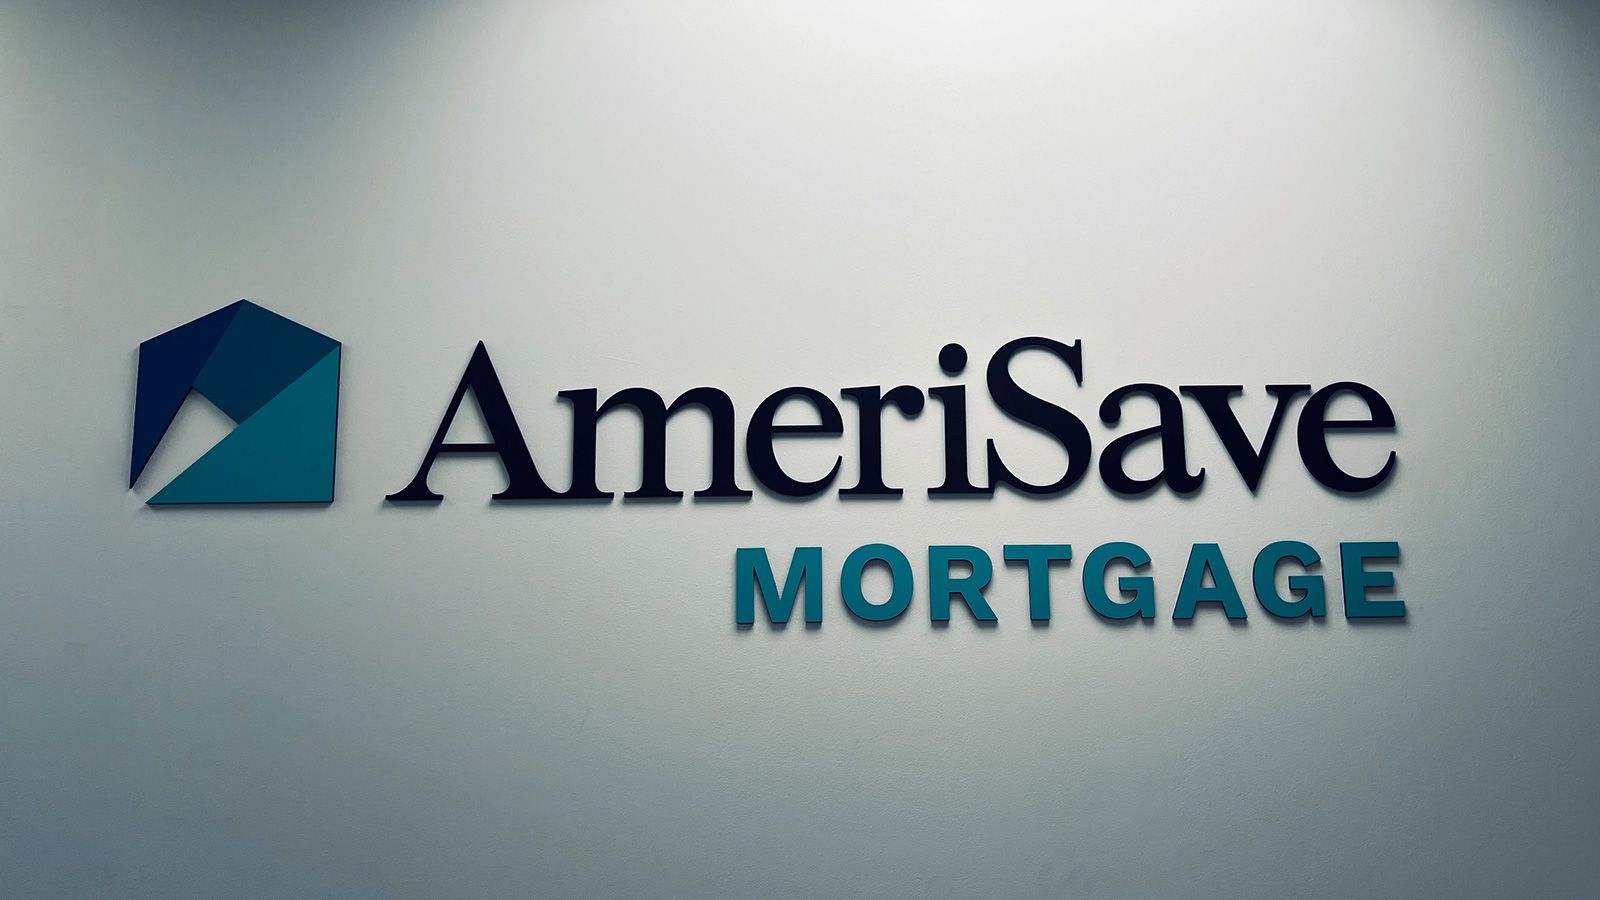 amerisave mortgage dimensional sign